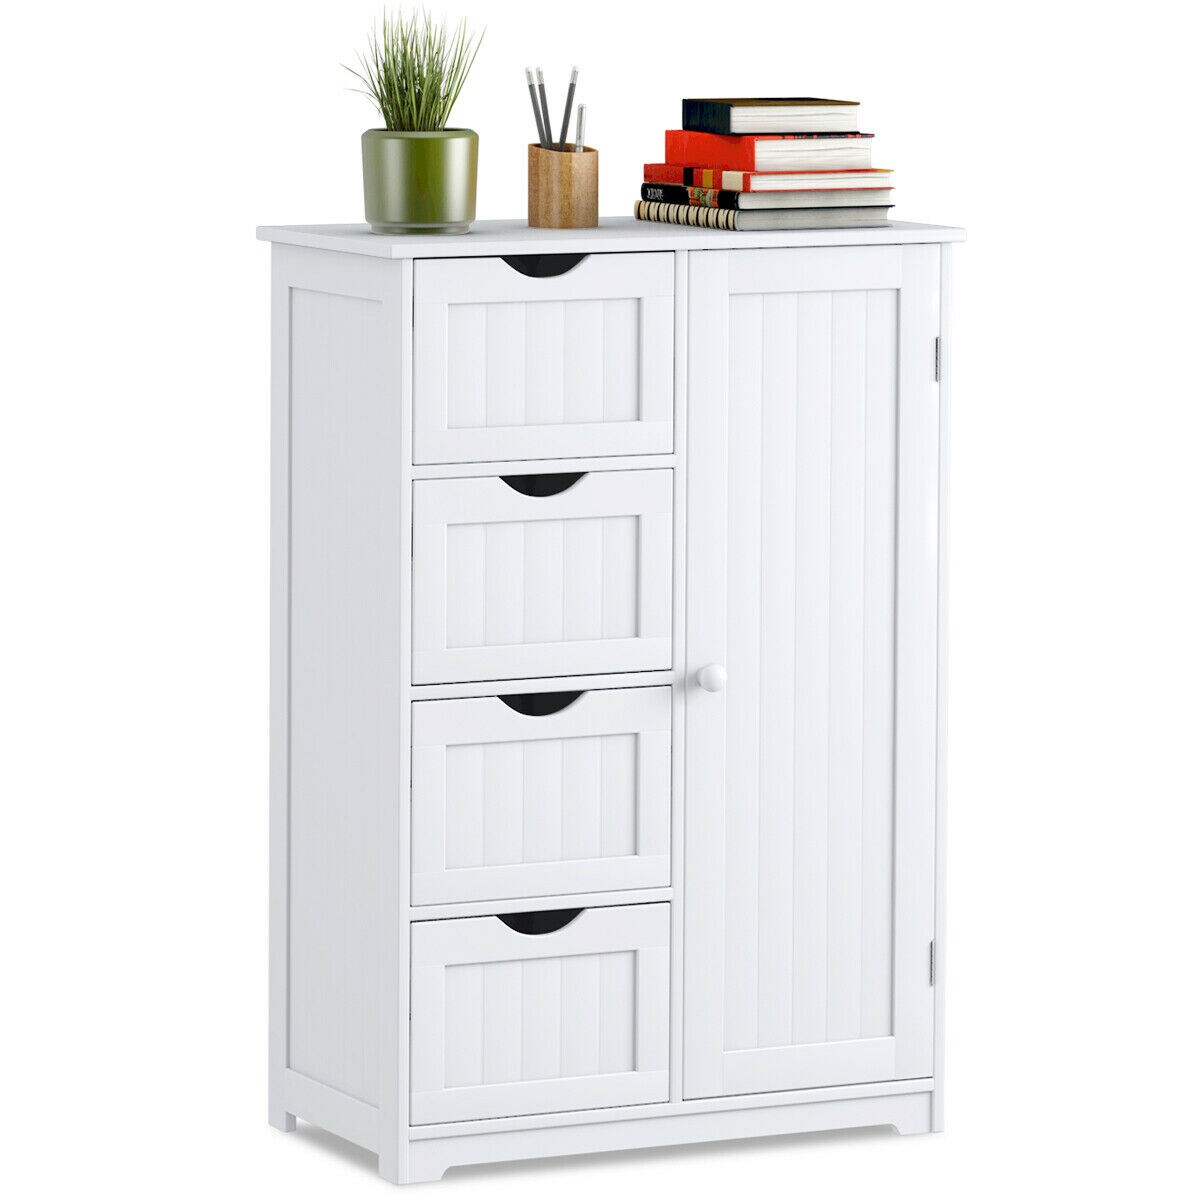 Gymax Storage Floor Cabinet Organizer Cupboard w/ 4 Drawers Adjustable Shelf White